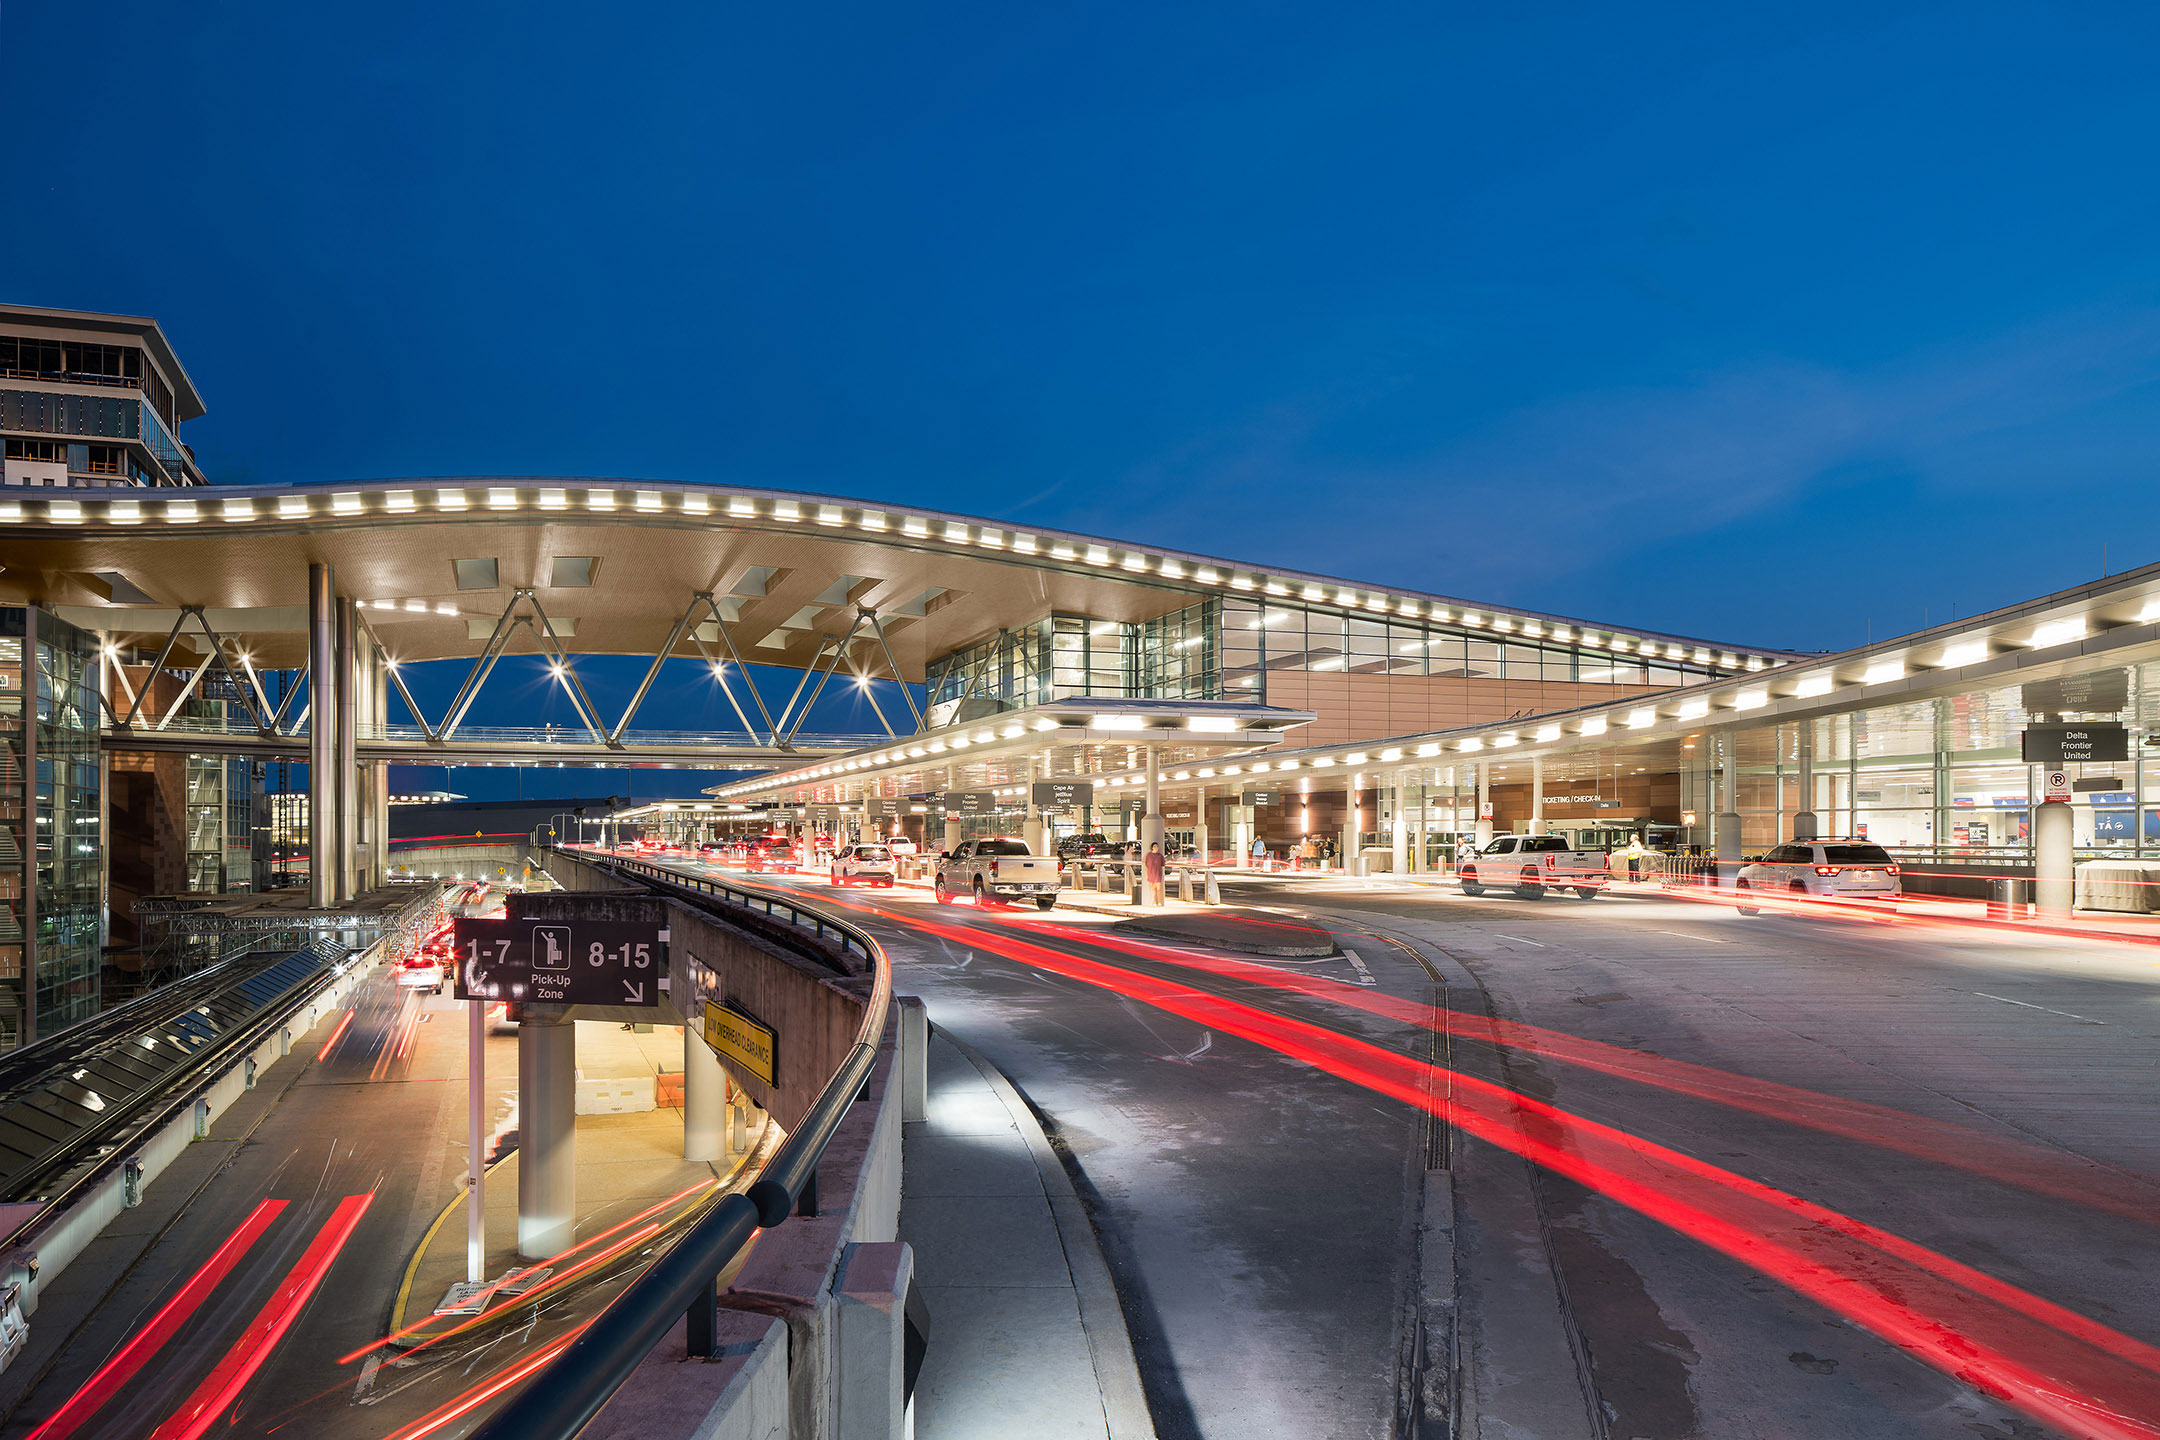 New International Arrivals Facility & Terminal Lobby Open at Nashville International Airport